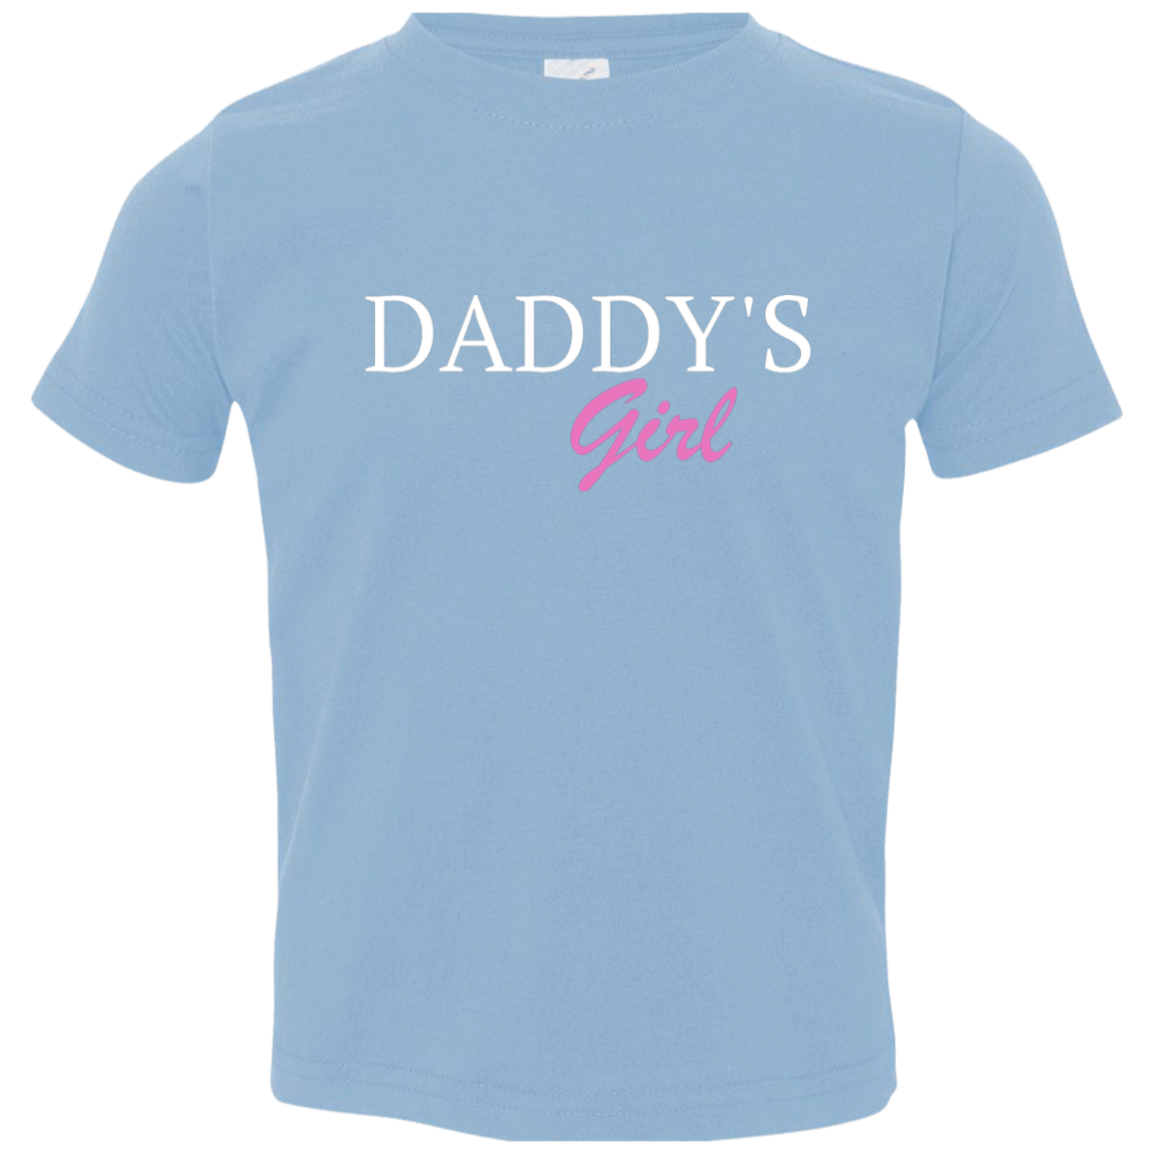 Toddler Jersey T-Shirt - "Daddy's Girl" Matching Shirt for Daughter